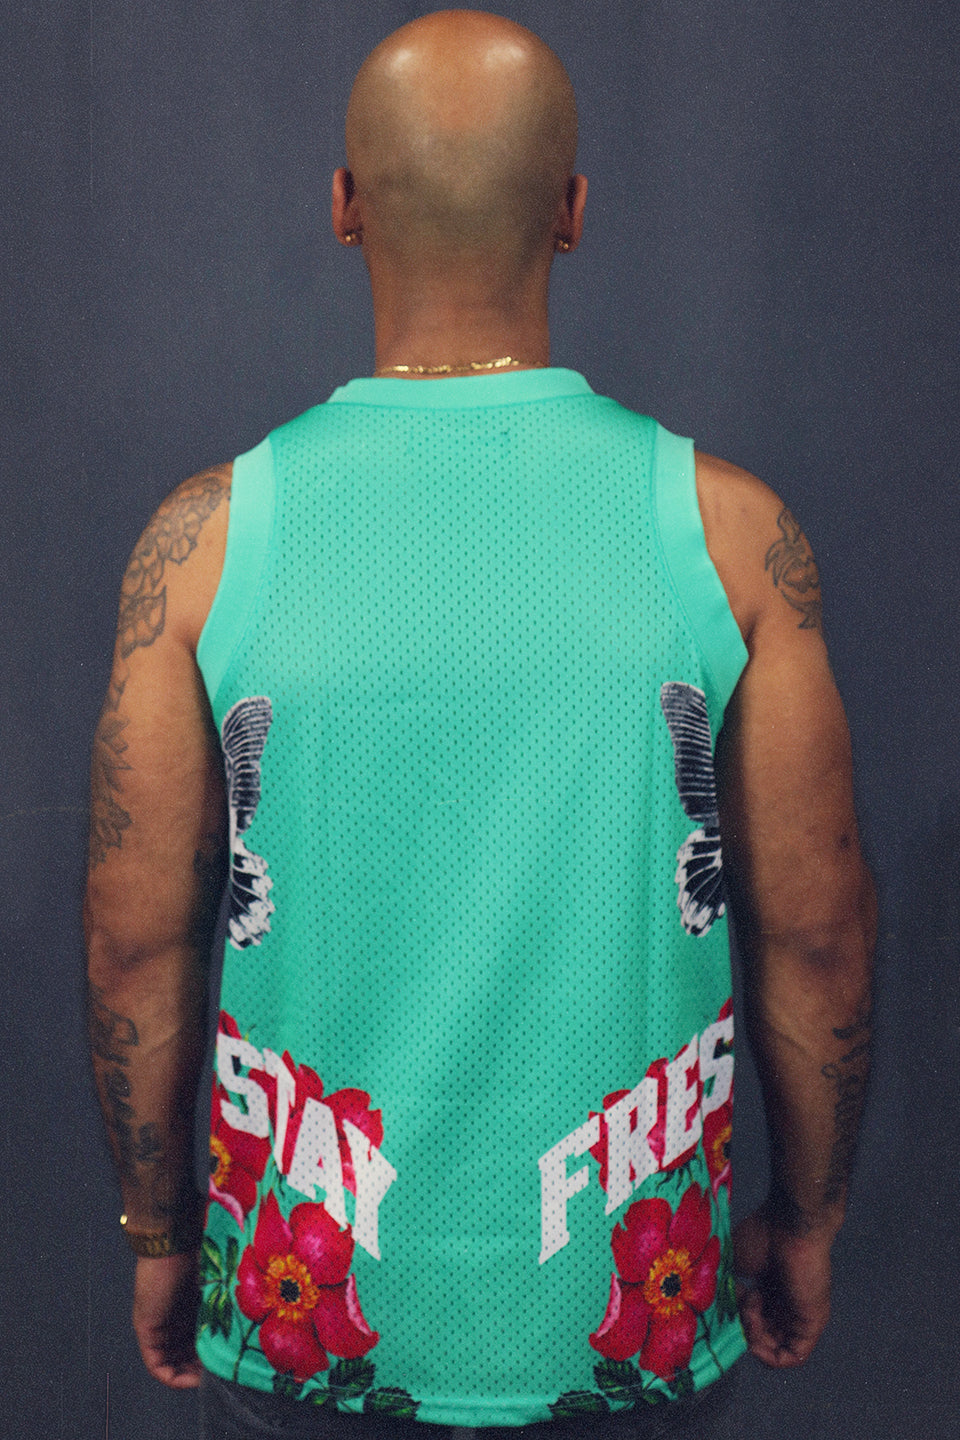 Men's Sleeveless Basketball Shirt Muscle Workout Aqua Sky Floral Mesh Tank Top back view